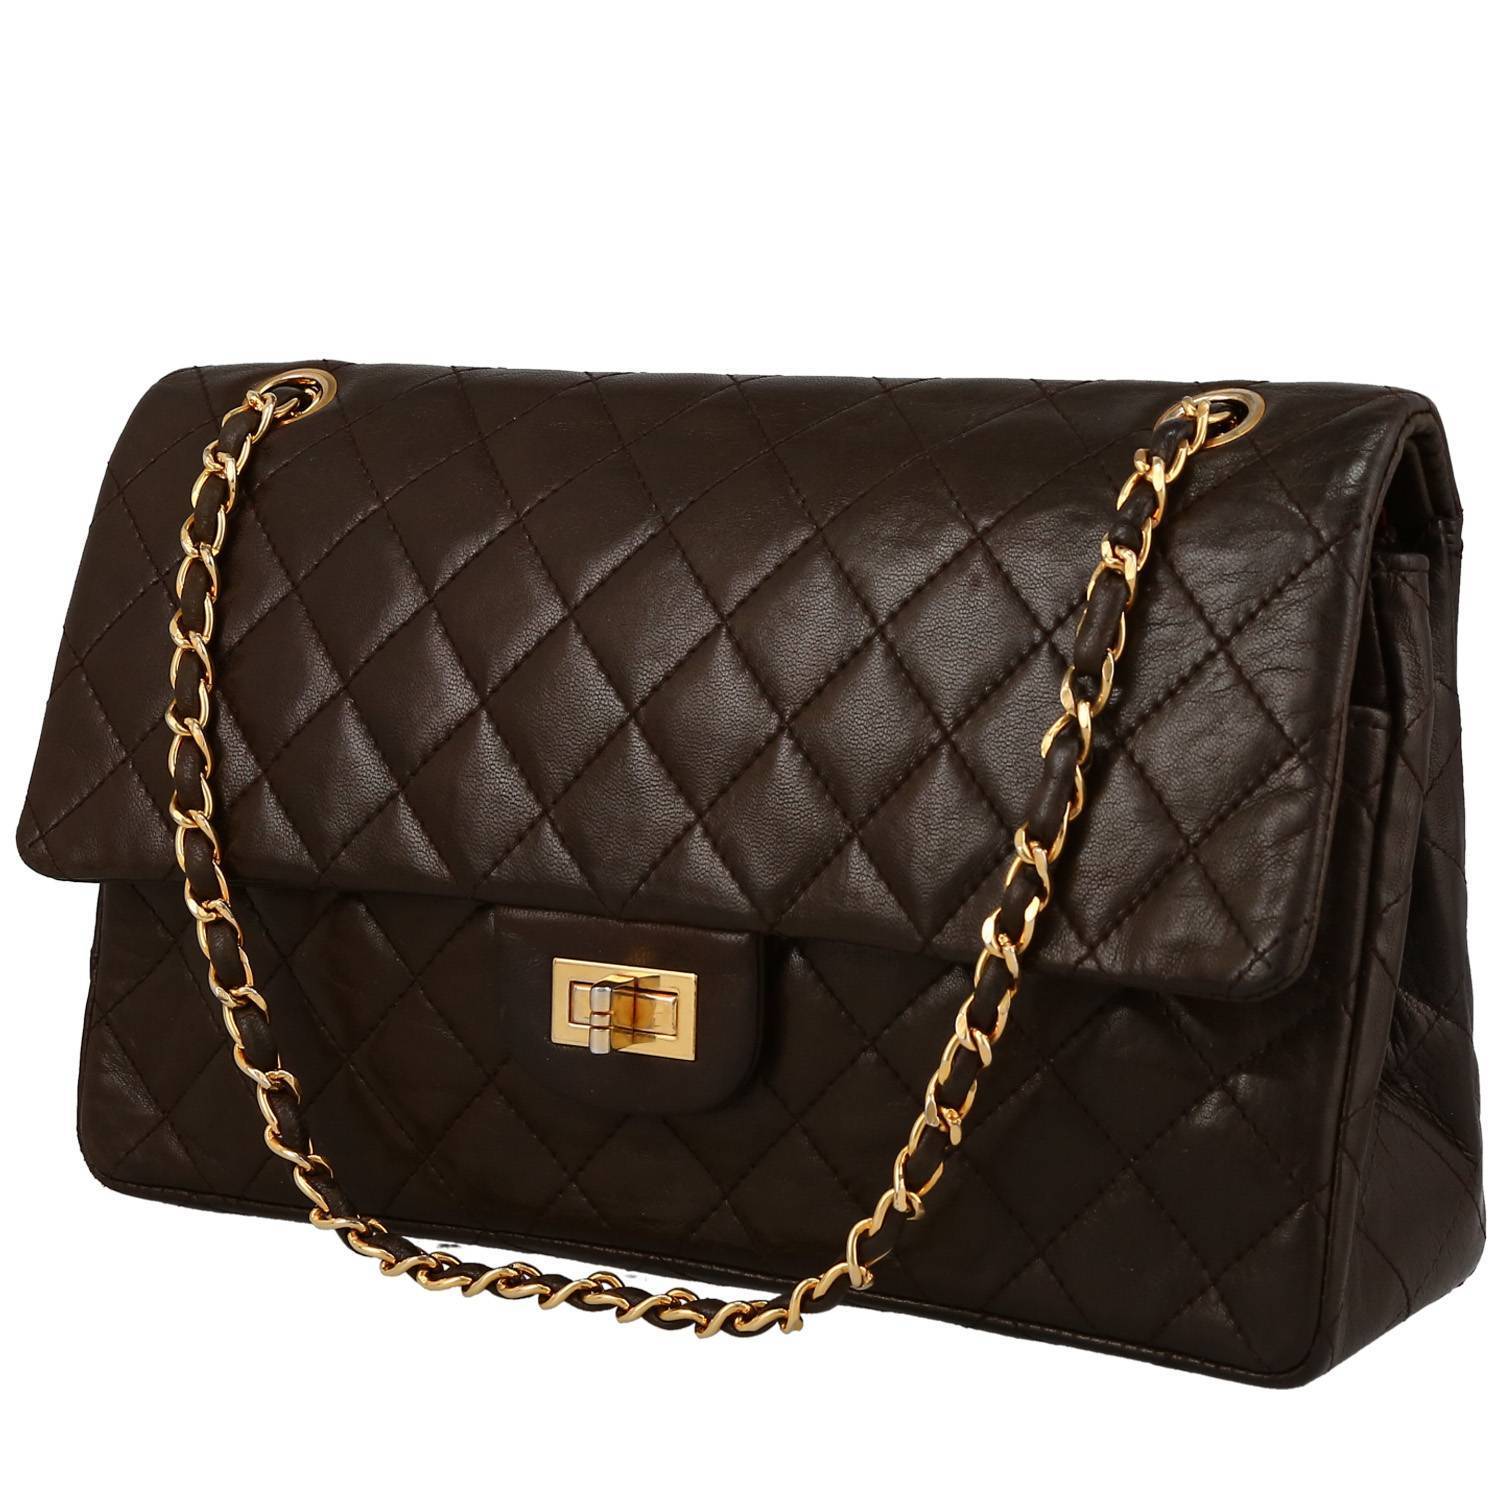 Chanel 2.55 Handtasche 403556, HealthdesignShops